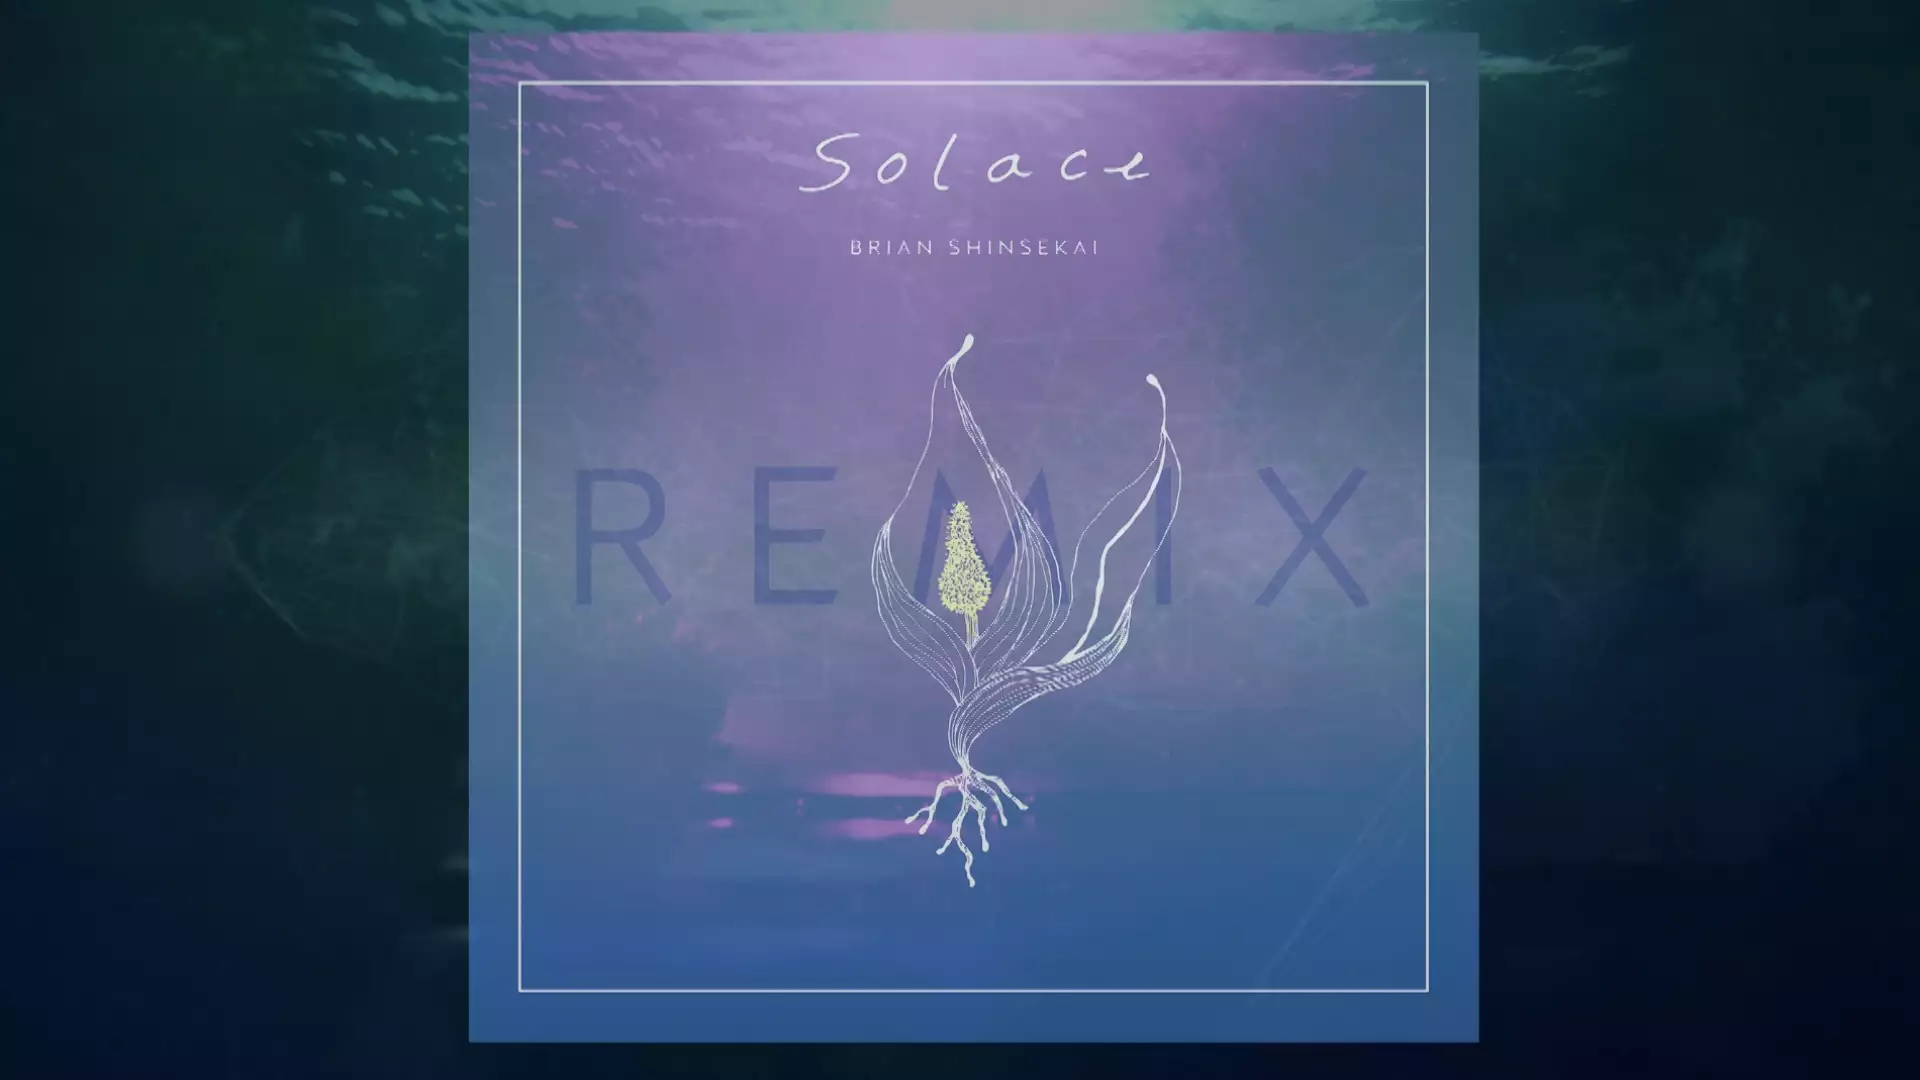 Solace (LEOJI Remix)